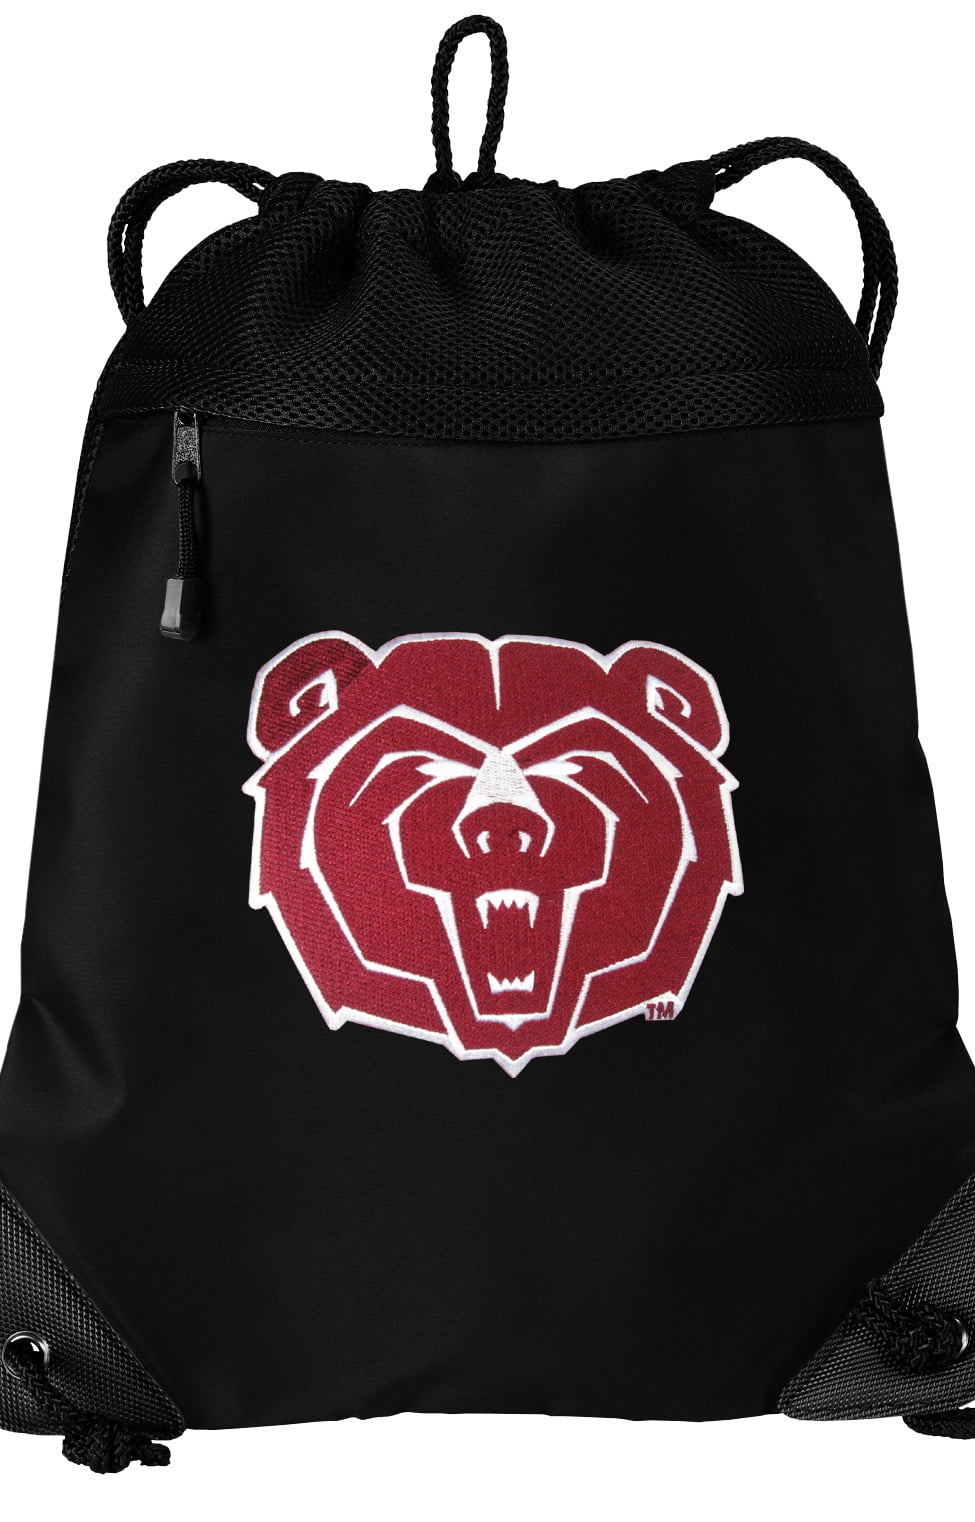 Broad Bay Large Missouri State Bears Gym Bag Deluxe Missouri State University Duffle Bag 